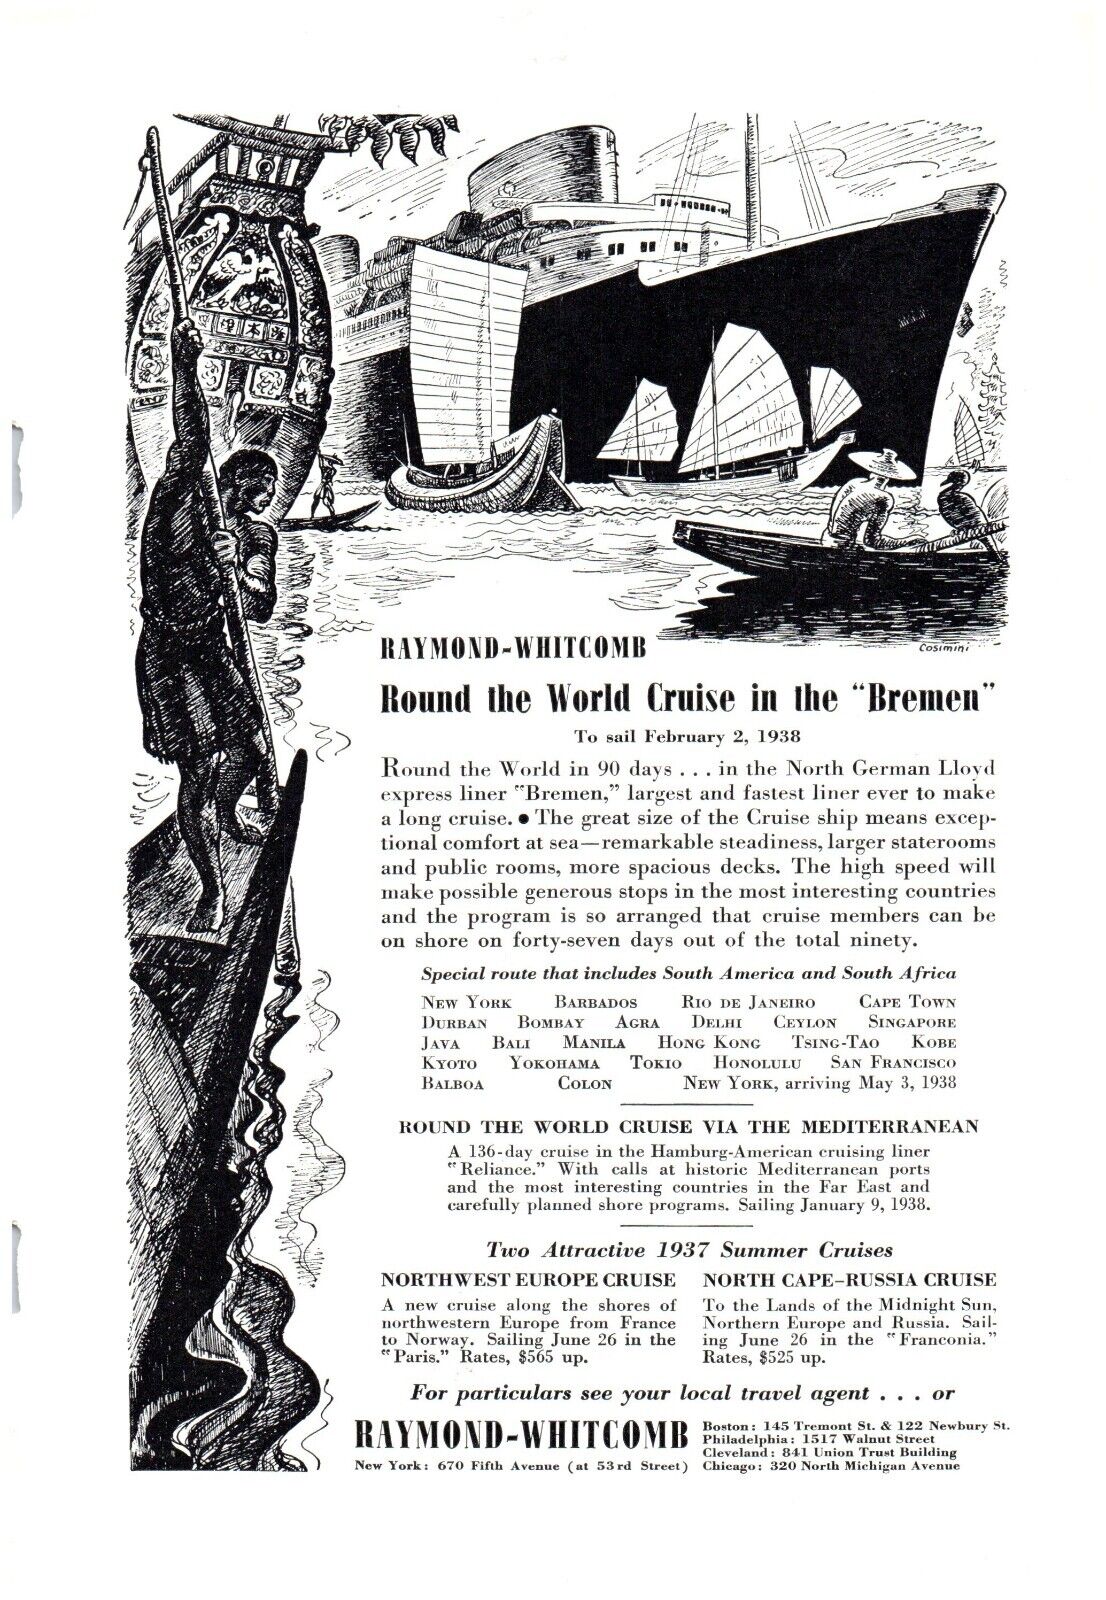 SS Bremen World Cruise Raymond Whitcomb New York Print Advertisement 1937